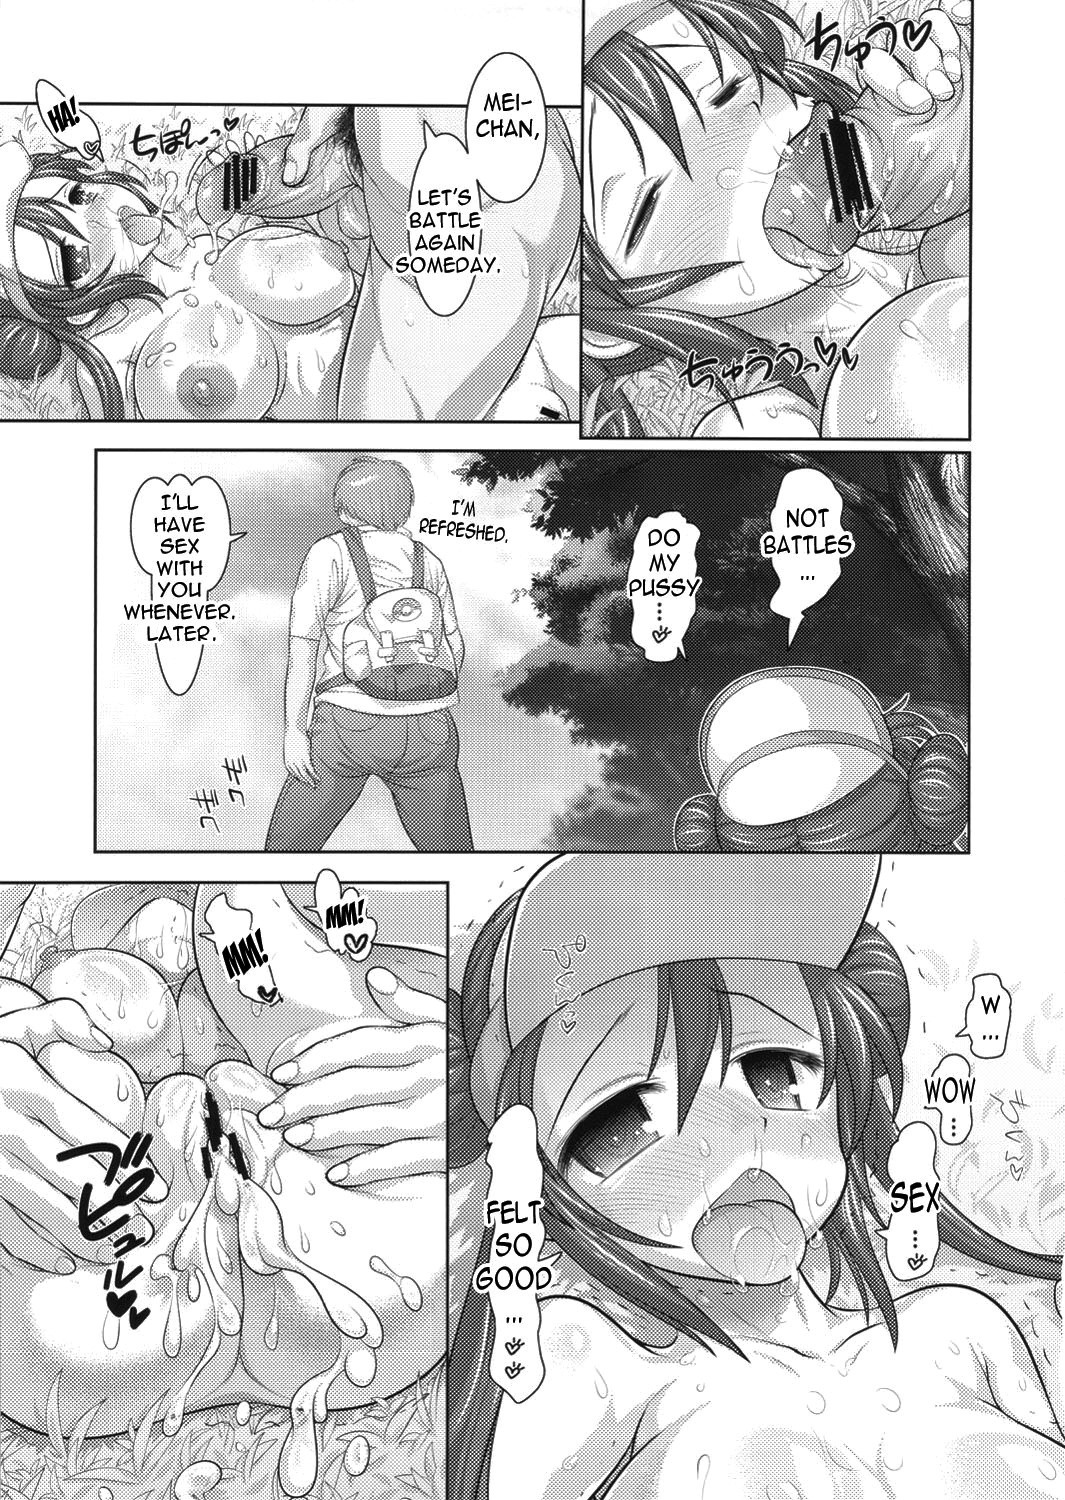 Outstanding hentai manga picture 16